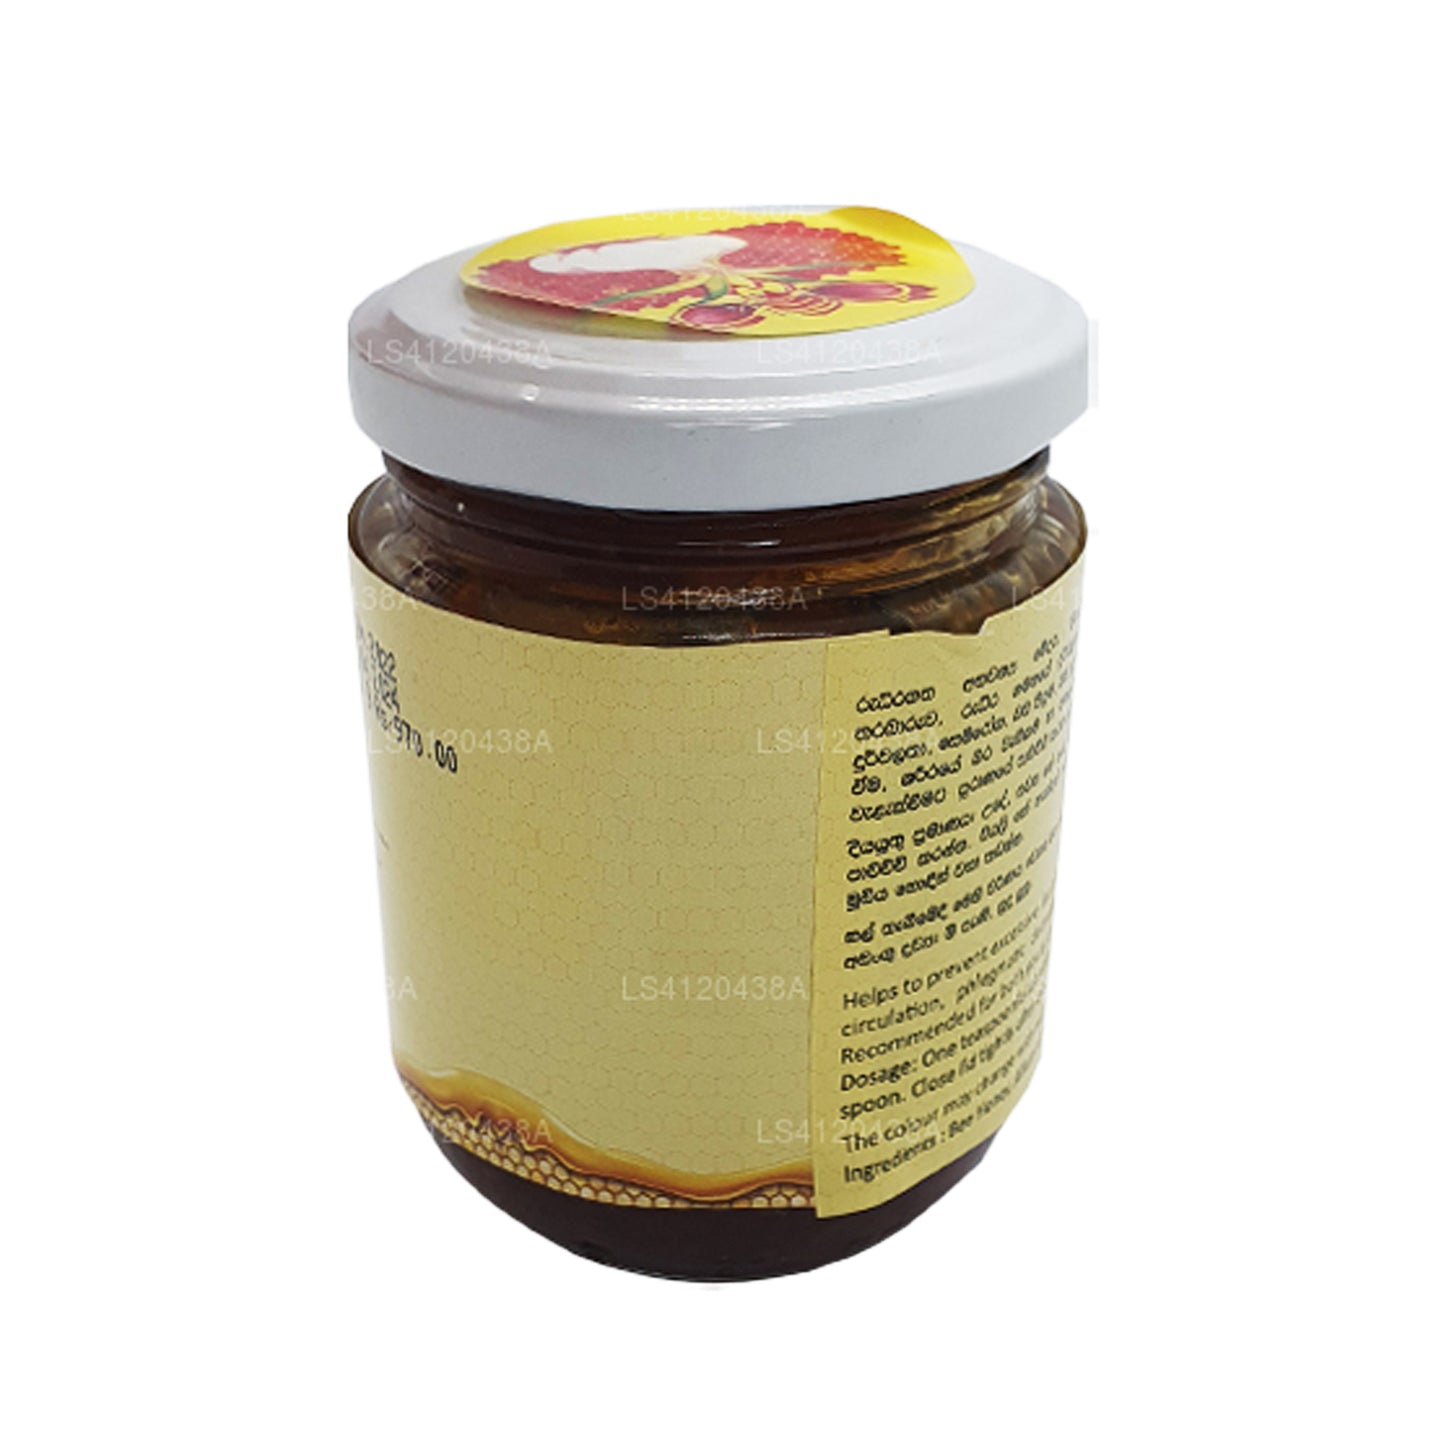 Чеснок Siddhalepa Madhu Lasuna в пчелином мёде (250 г)